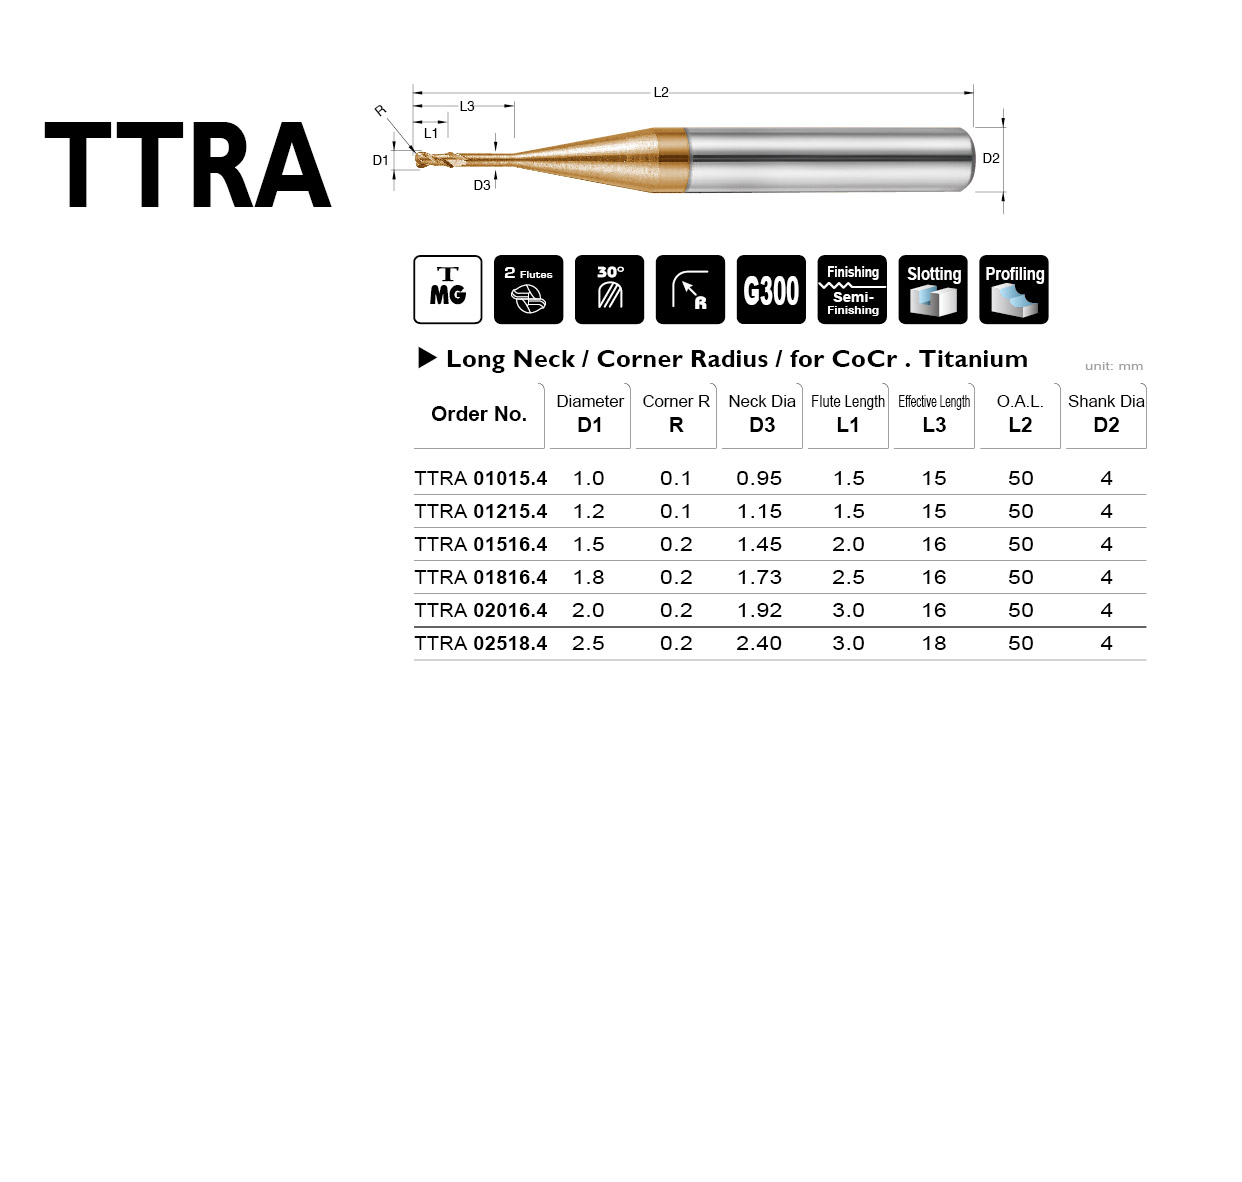 Catalog|TTRA series